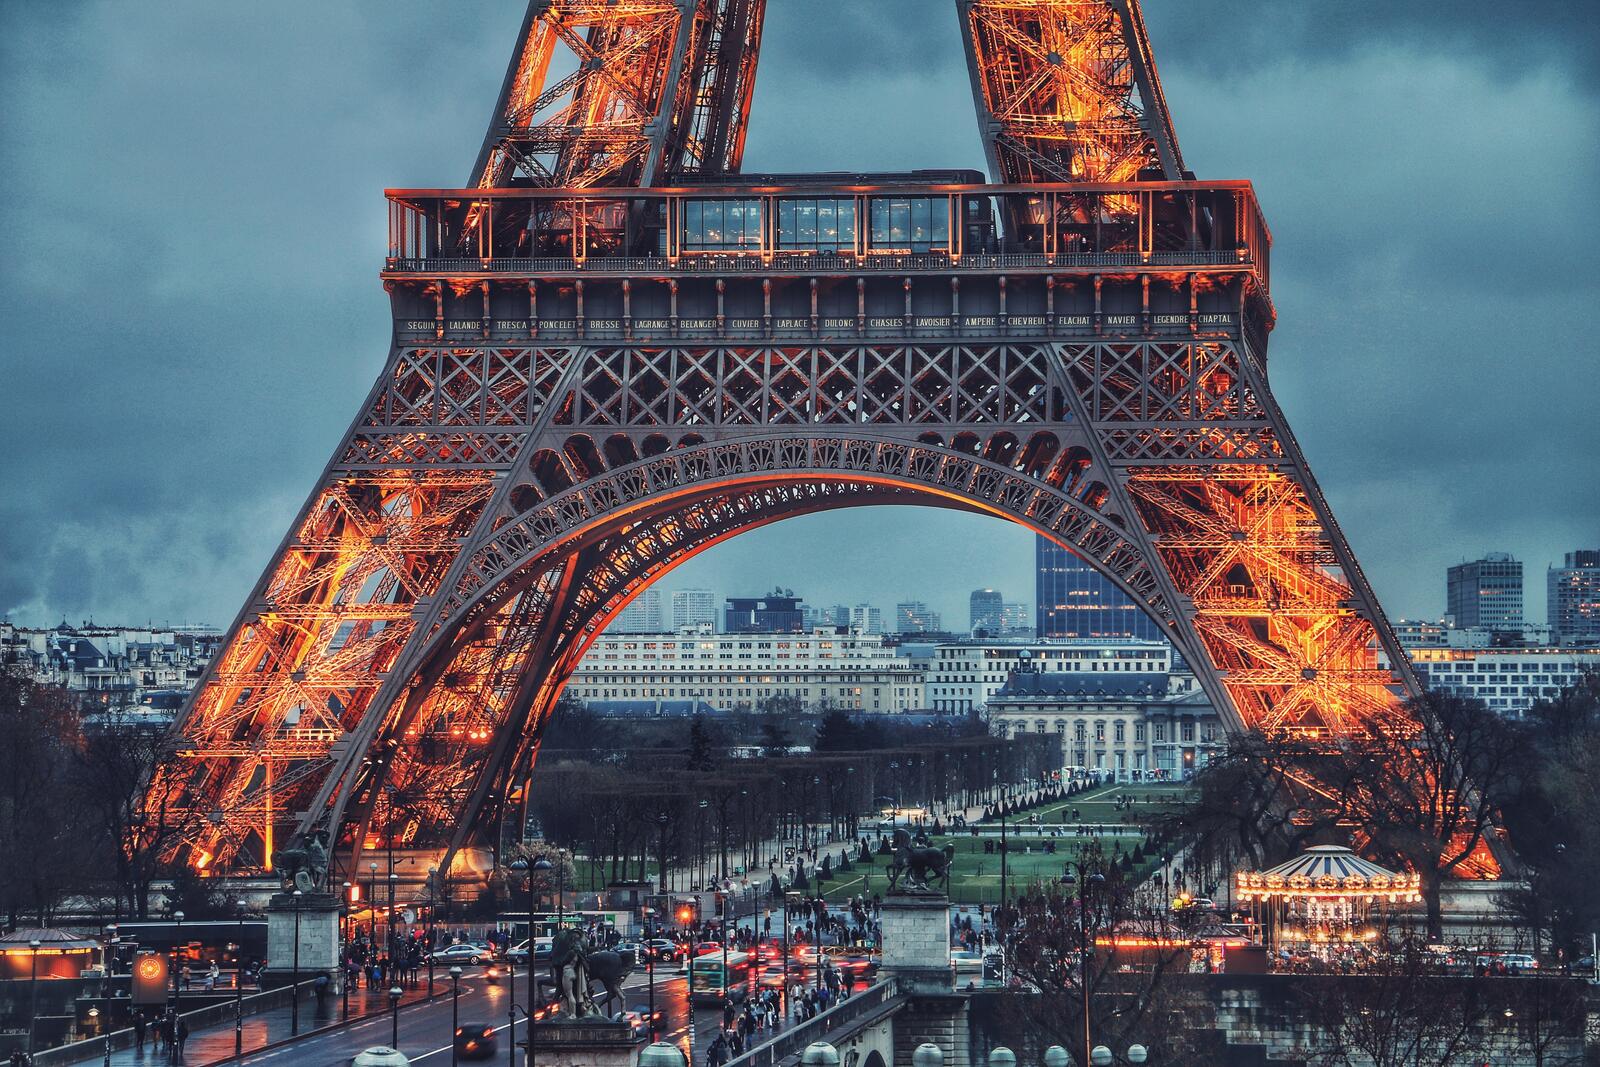 Wallpapers Paris Eiffel Tower people on the desktop